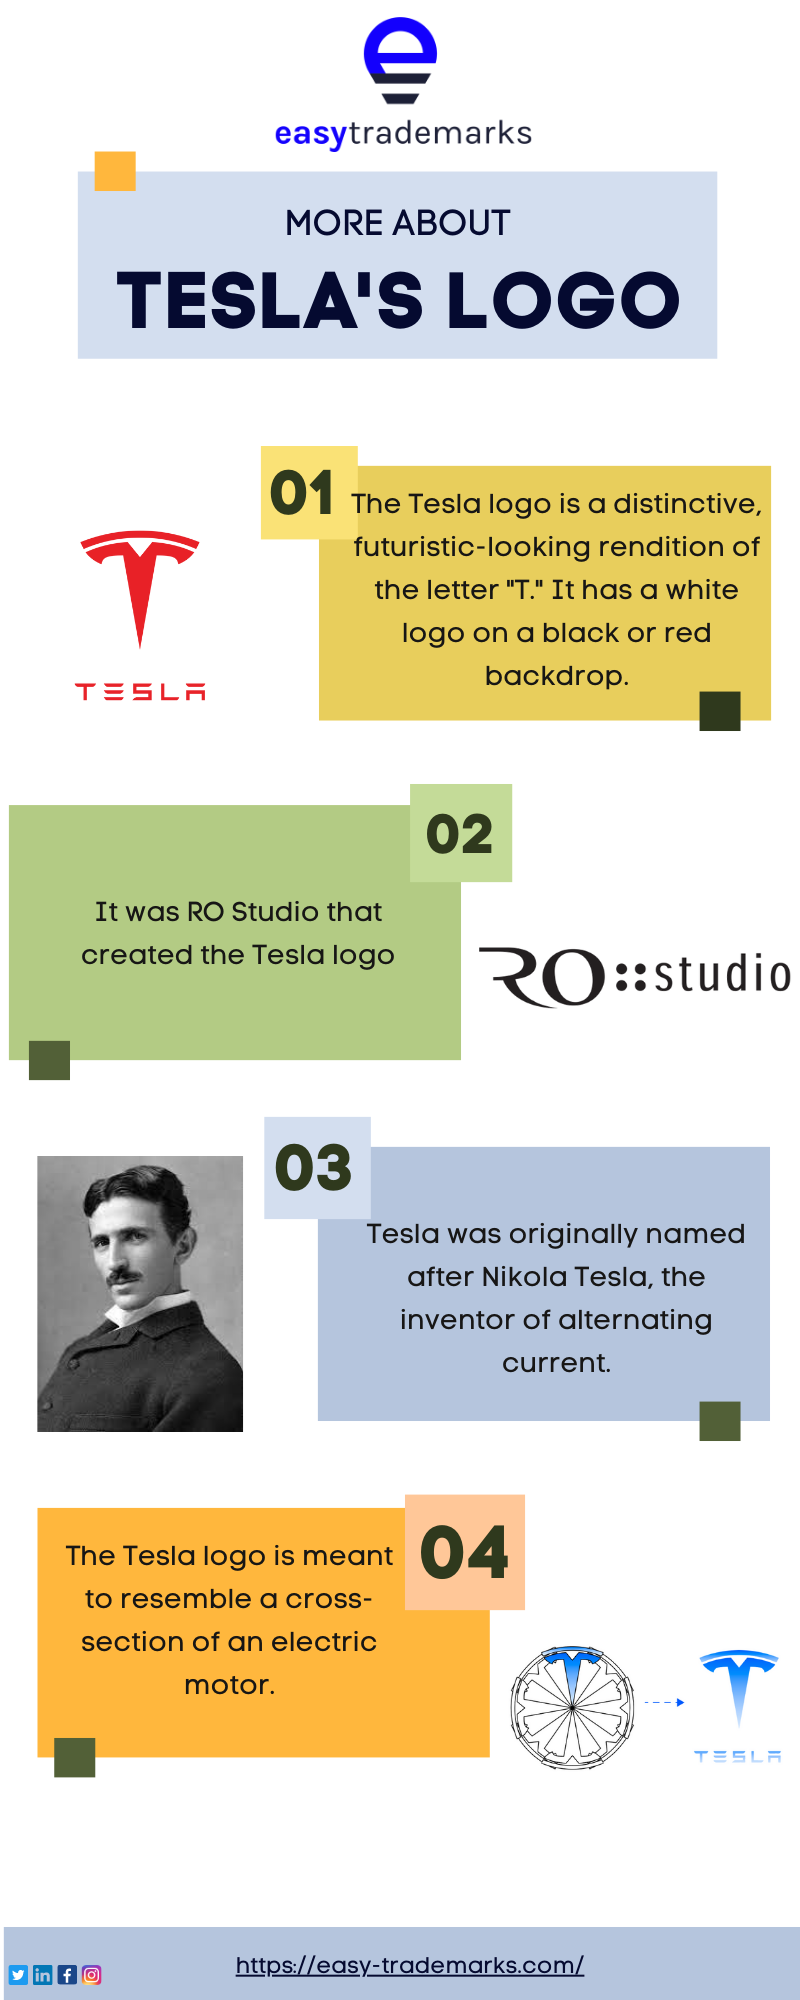 The History of Tesla's Logo